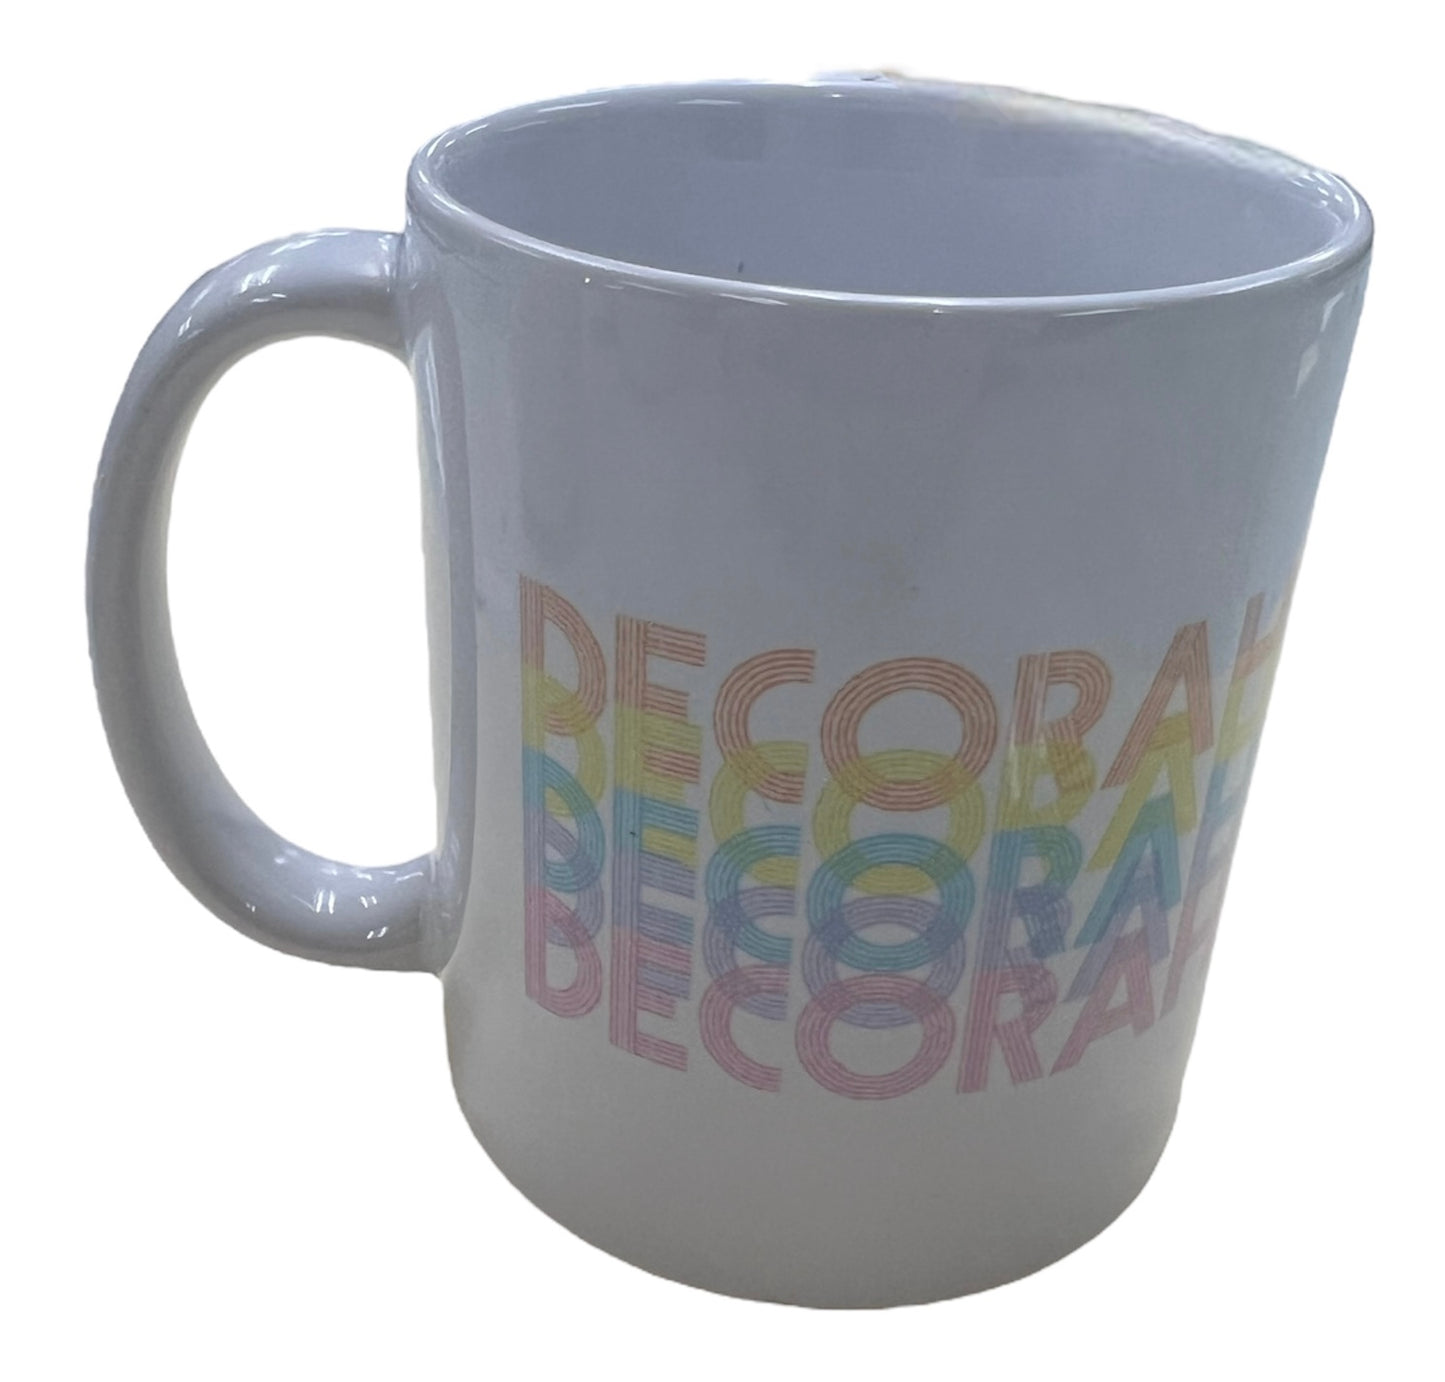 Ceramic Coffee Mug - Decorah Collection